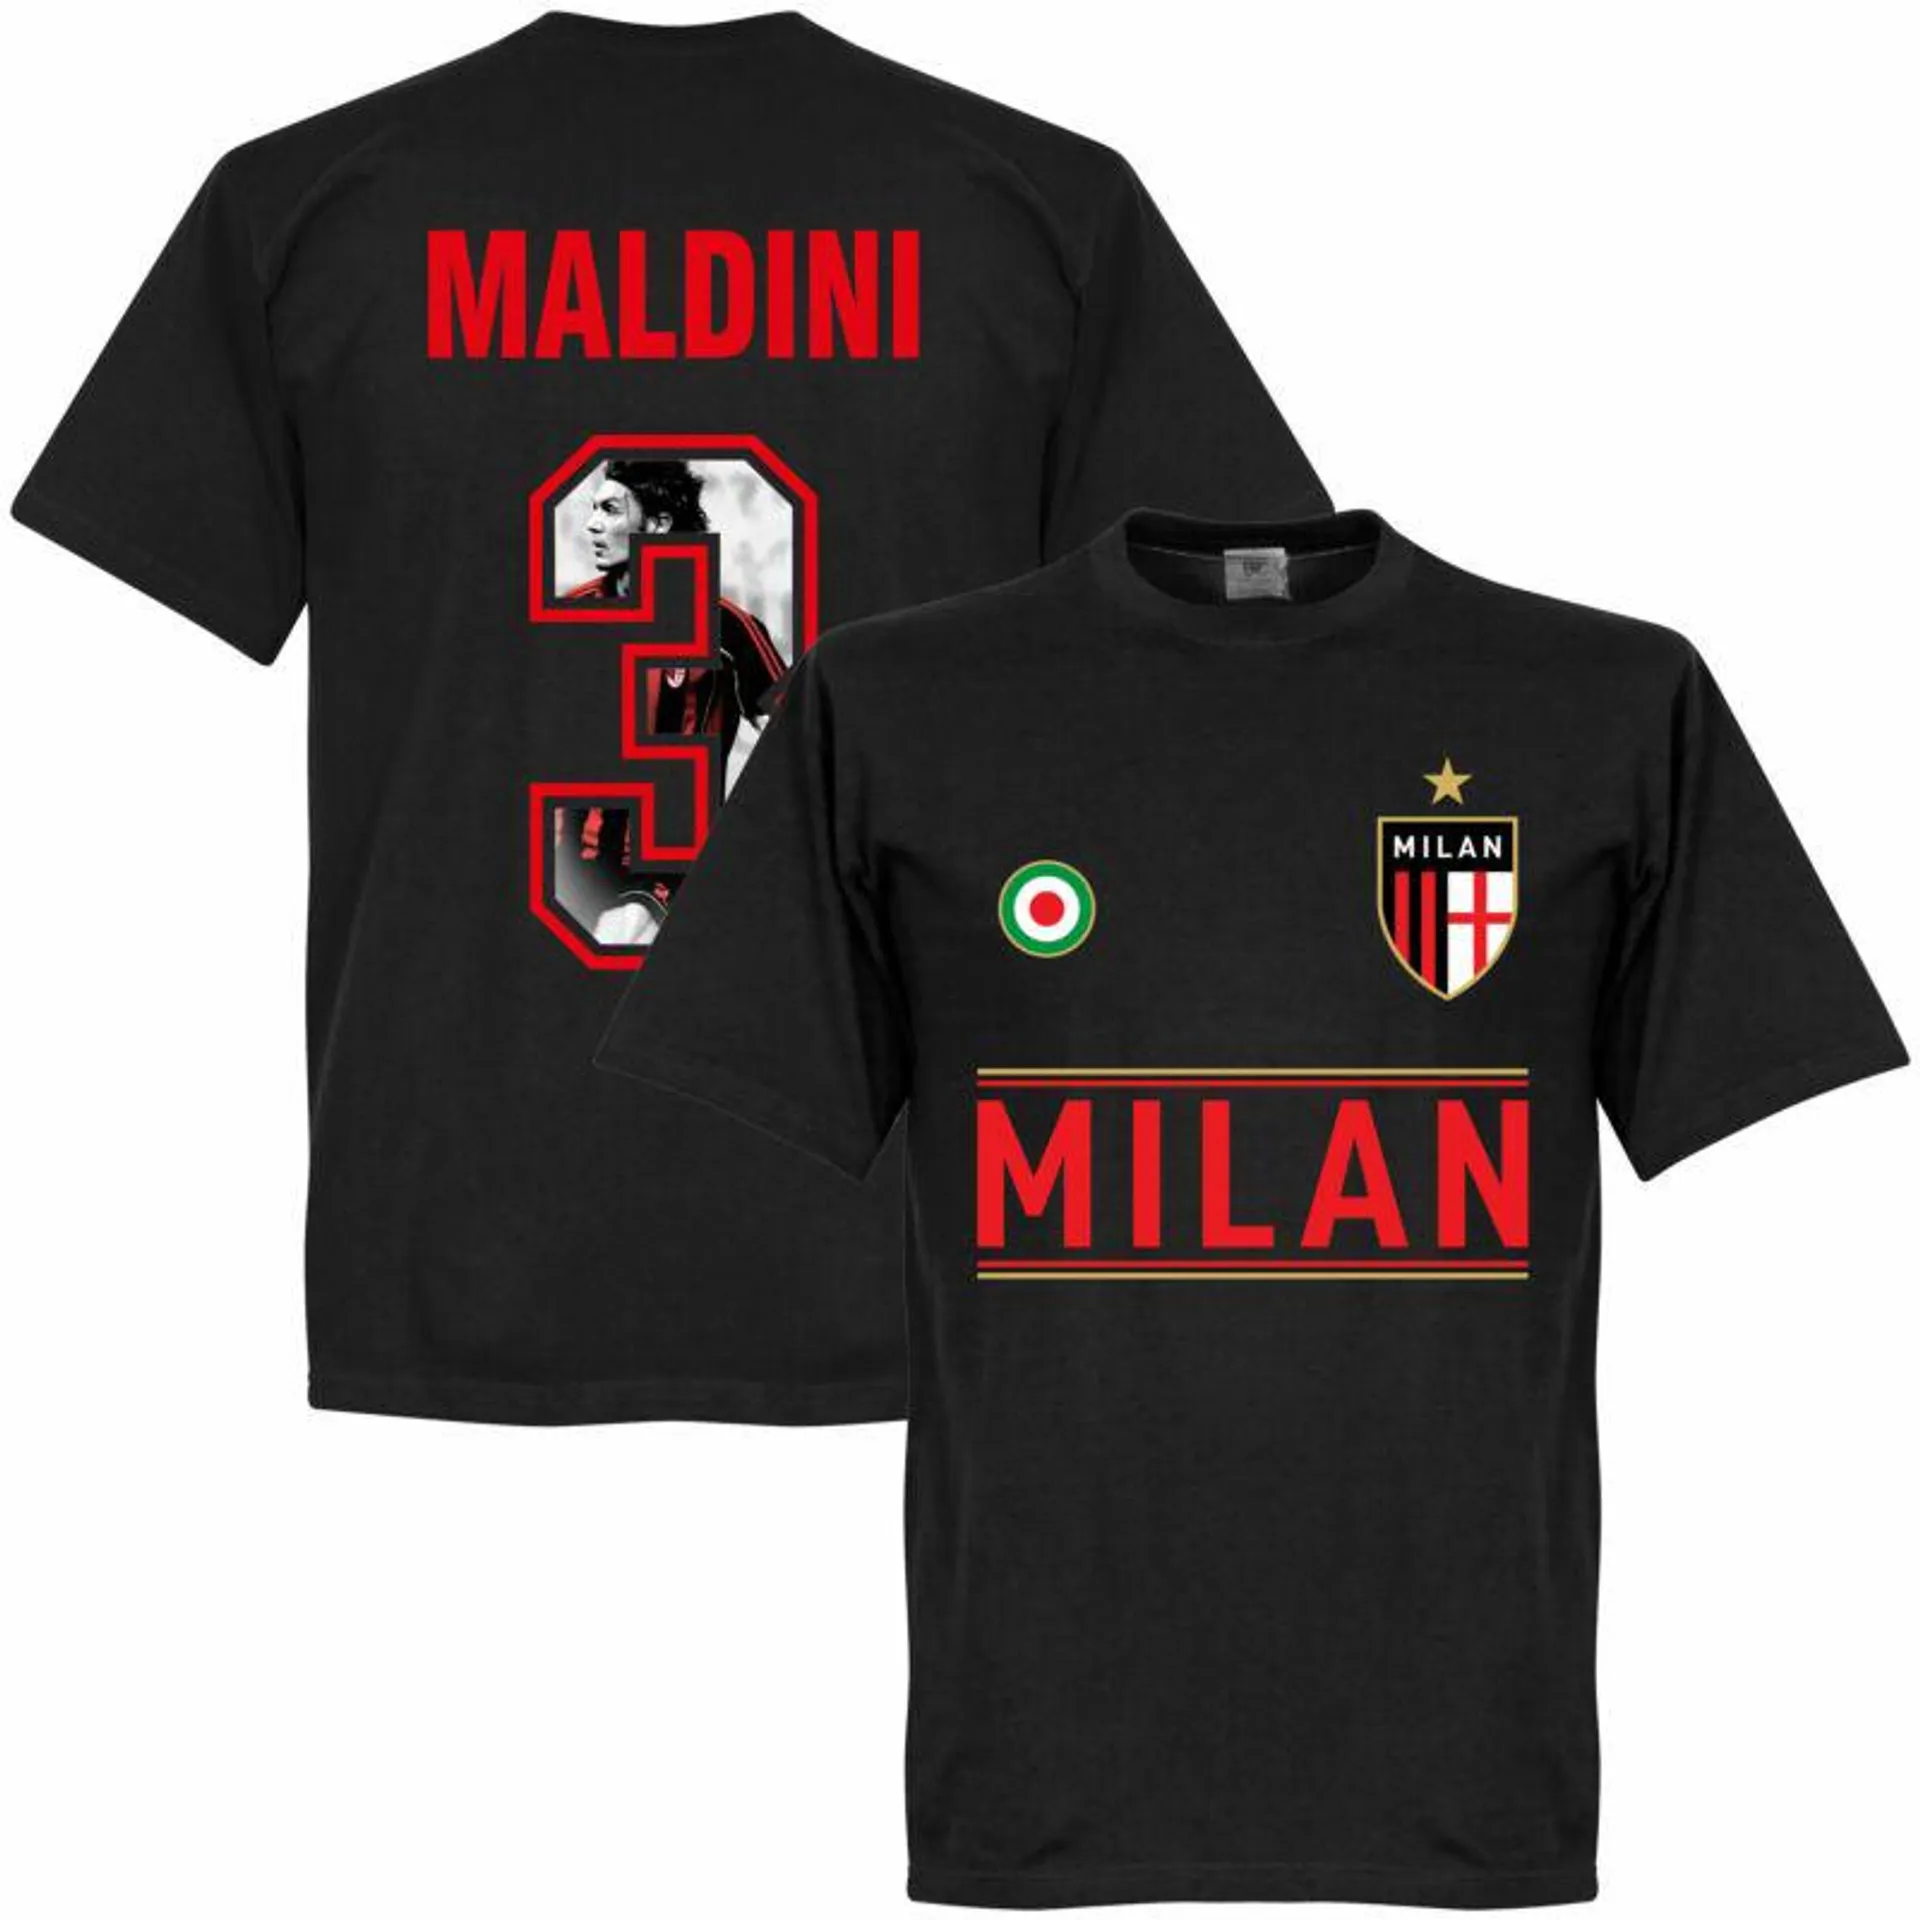 Milan Maldini 3 Gallery Team T-Shirt - Black